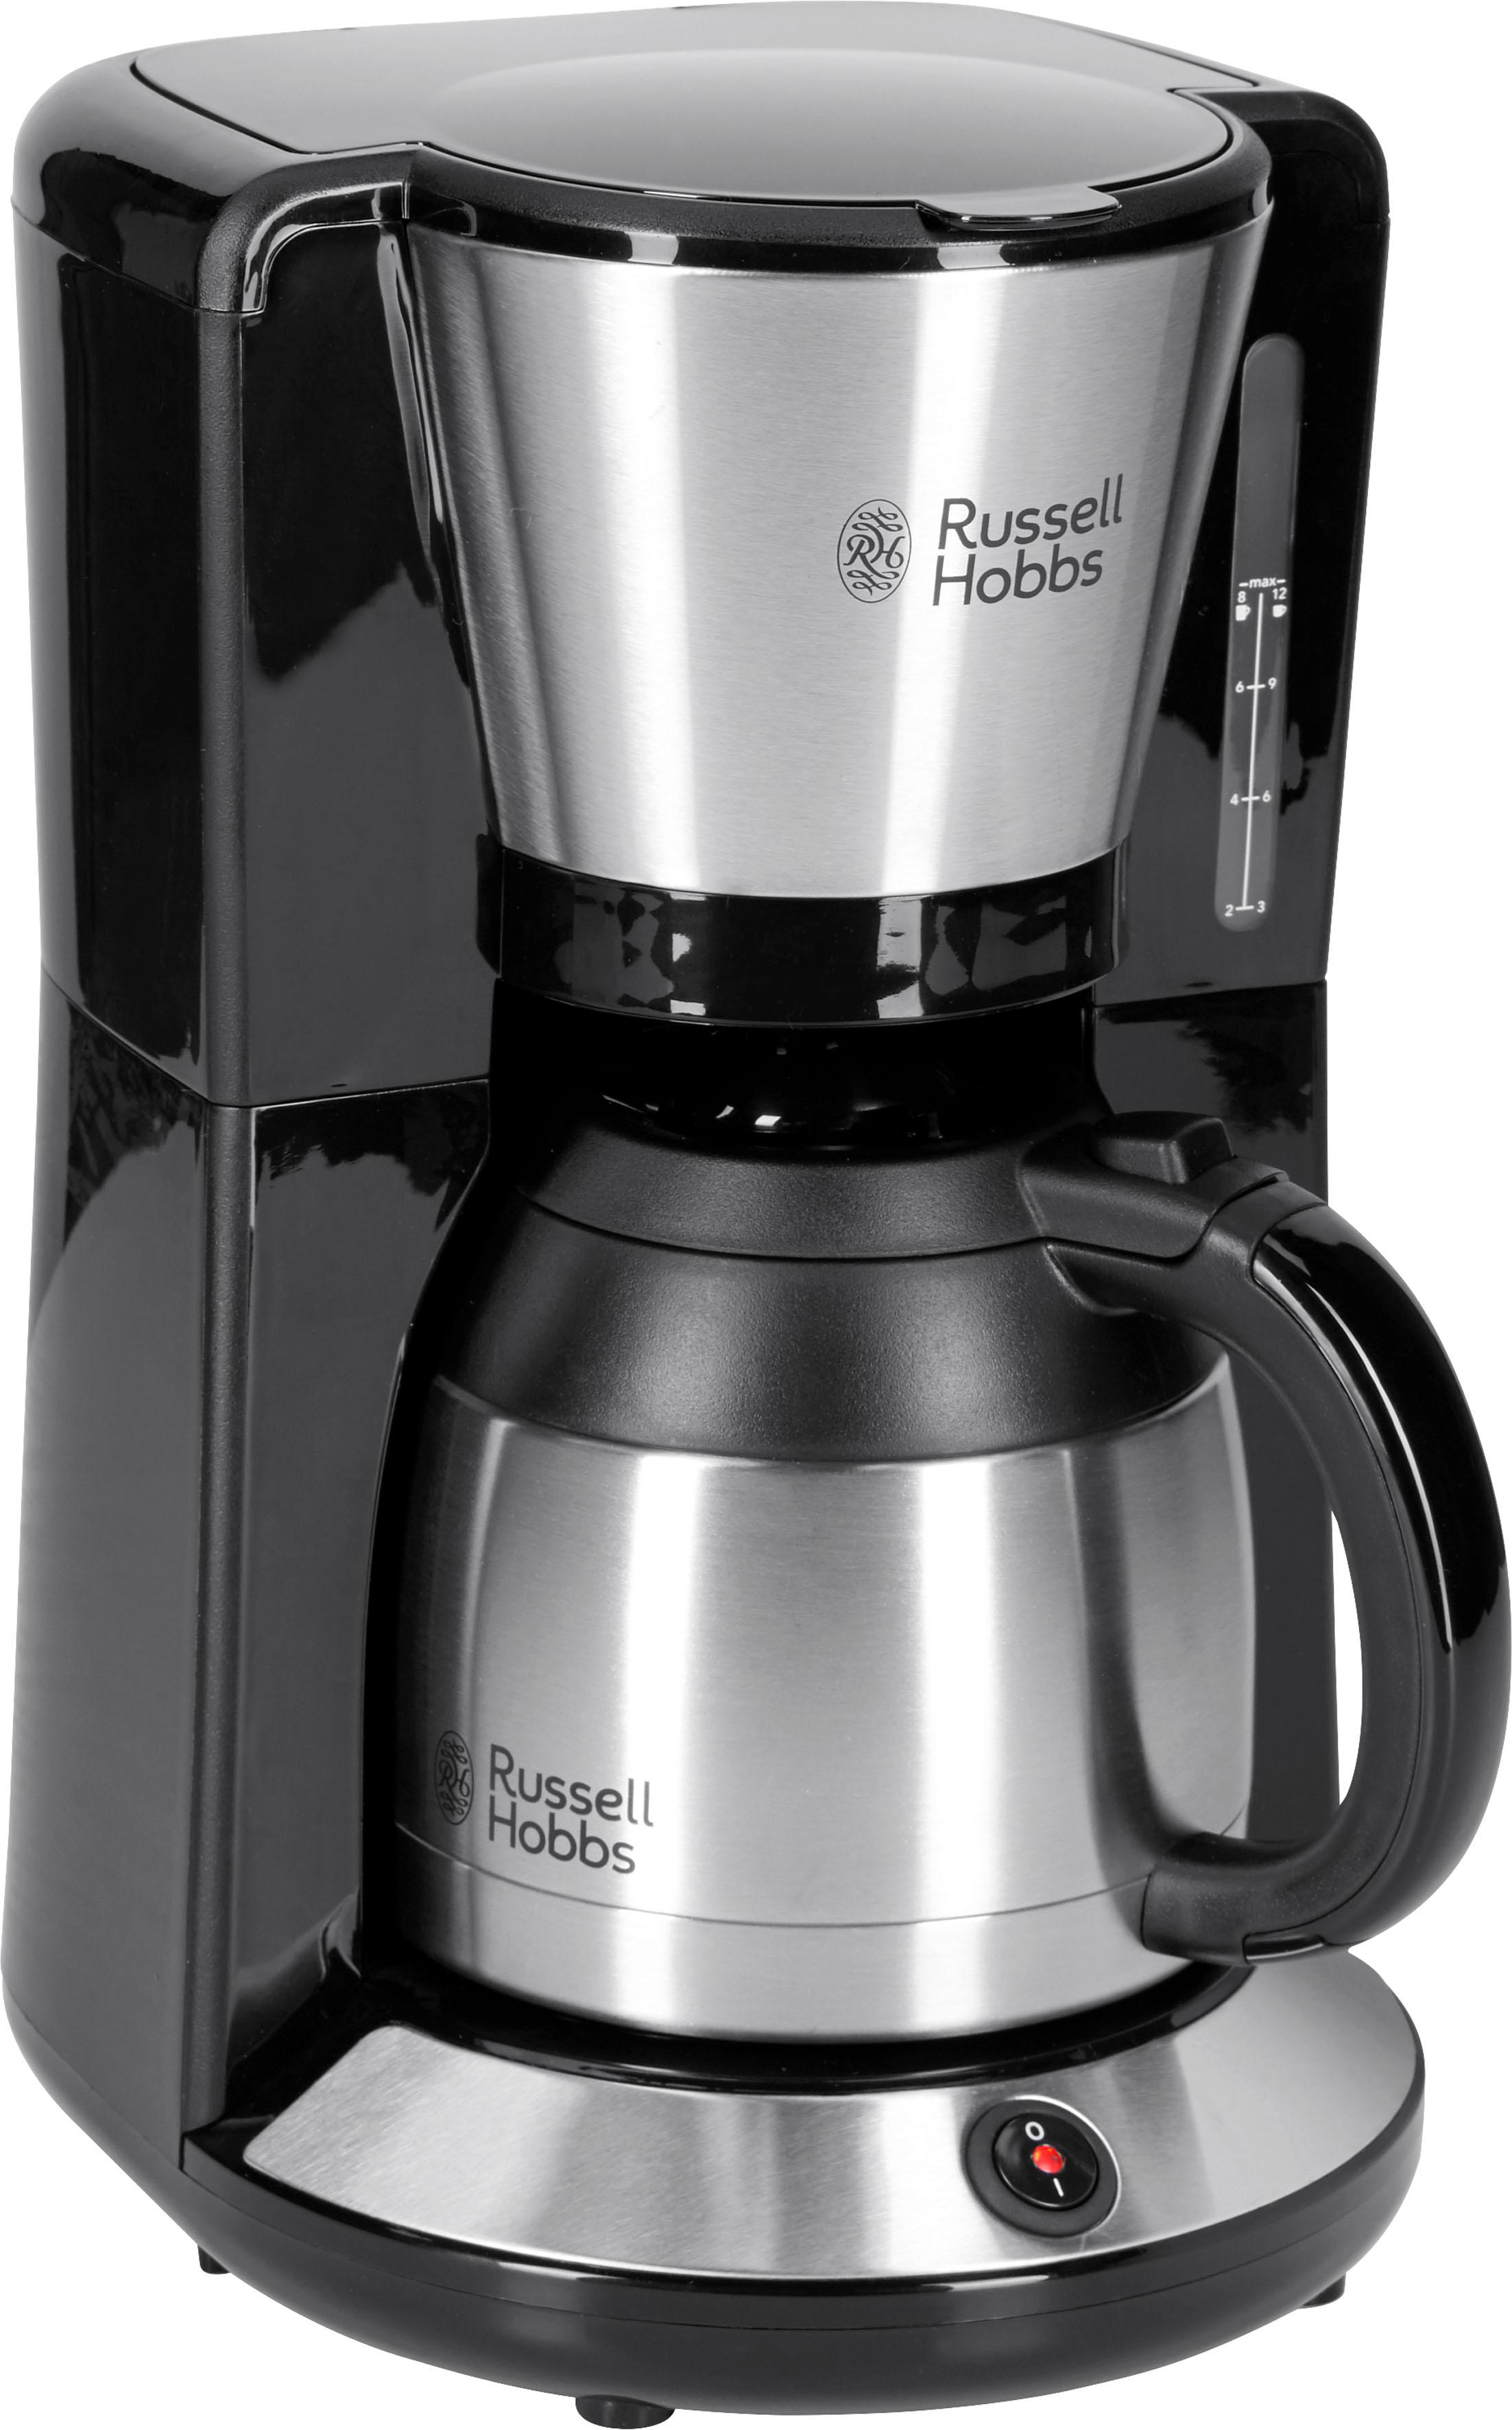 RUSSELL auf Raten Kaffeemaschine kaufen Filterkaffeemaschine »Victory Digitale HOBBS 1x4, 24030-56«, Glas-